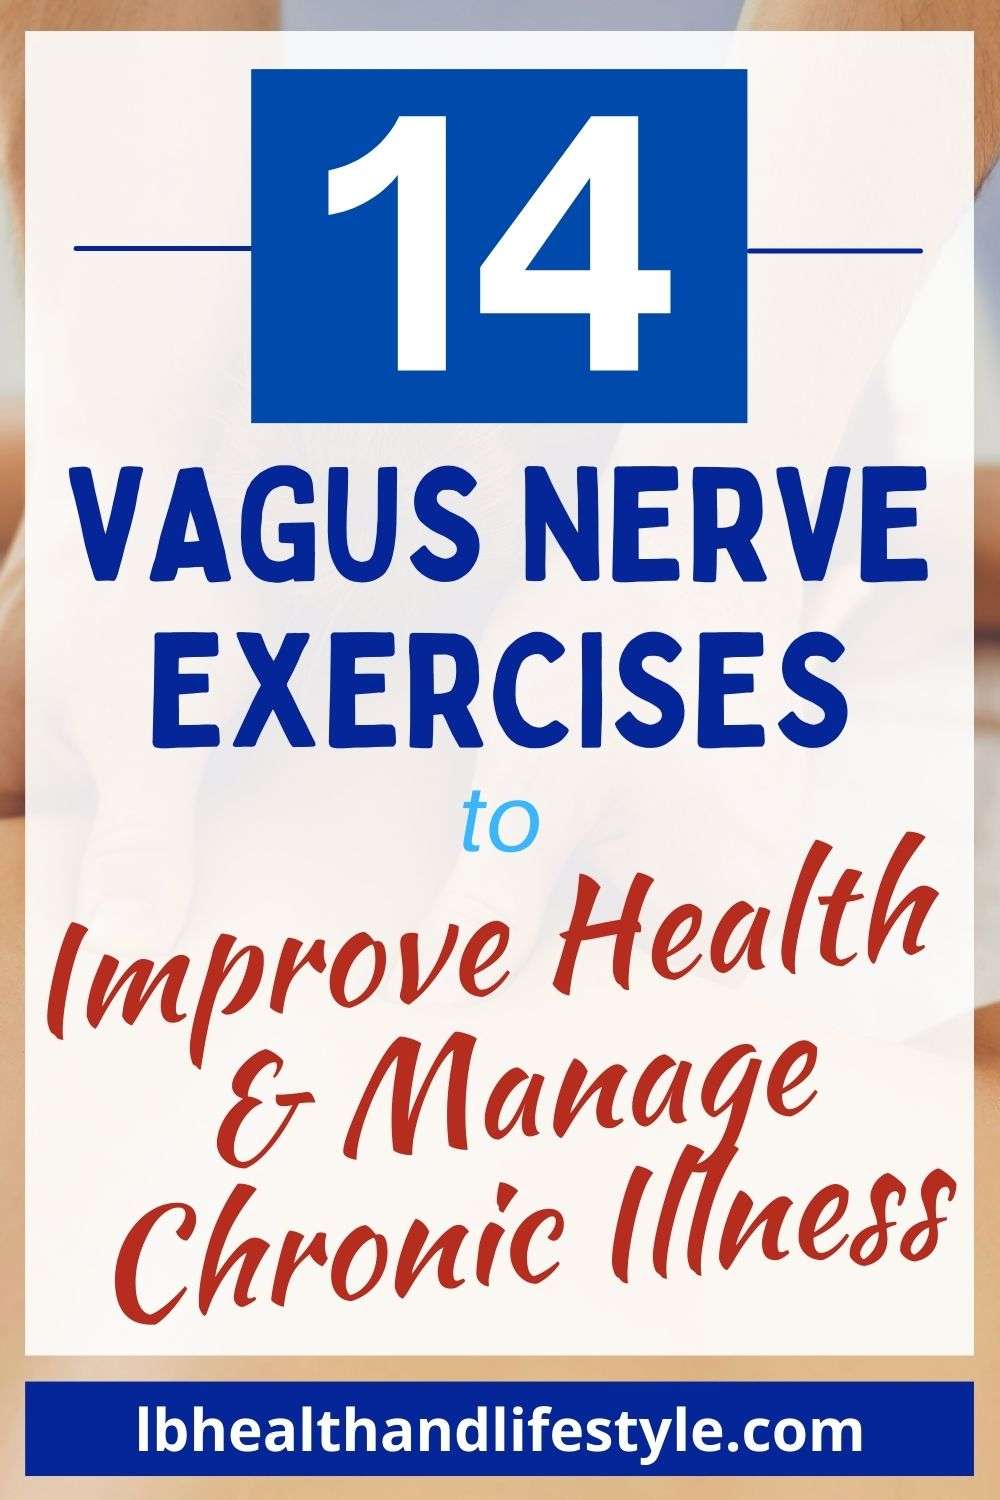 14 vagus nerve exercises to improve health & manage chronic illness